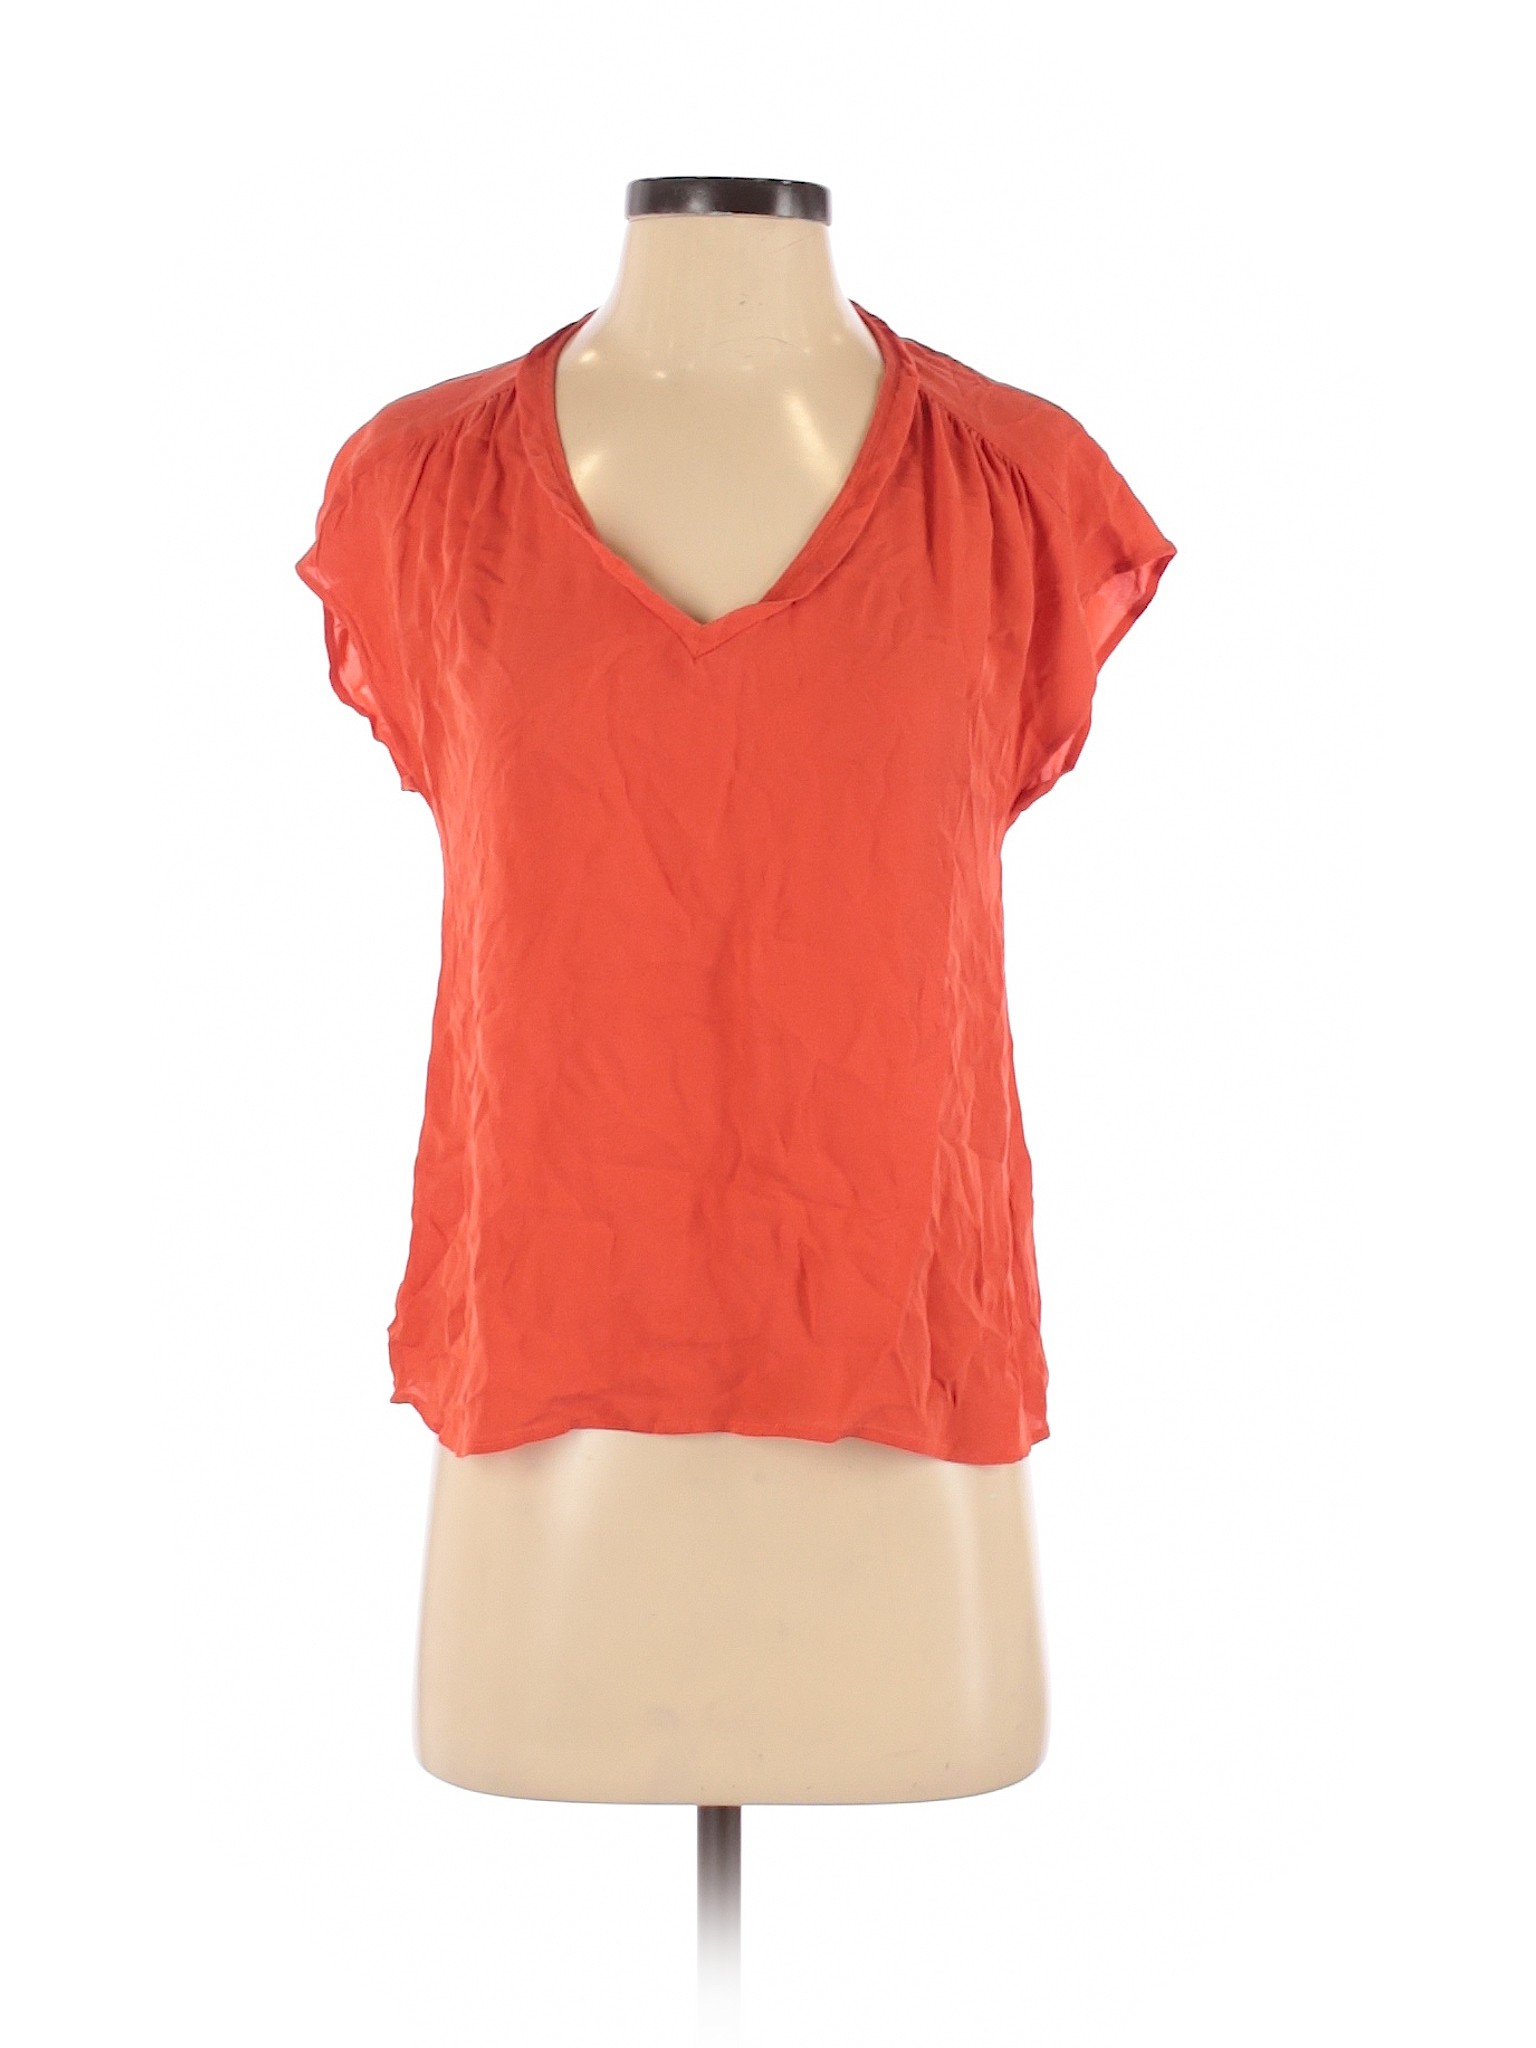 Joie Women Orange Short Sleeve Silk Top XS | eBay